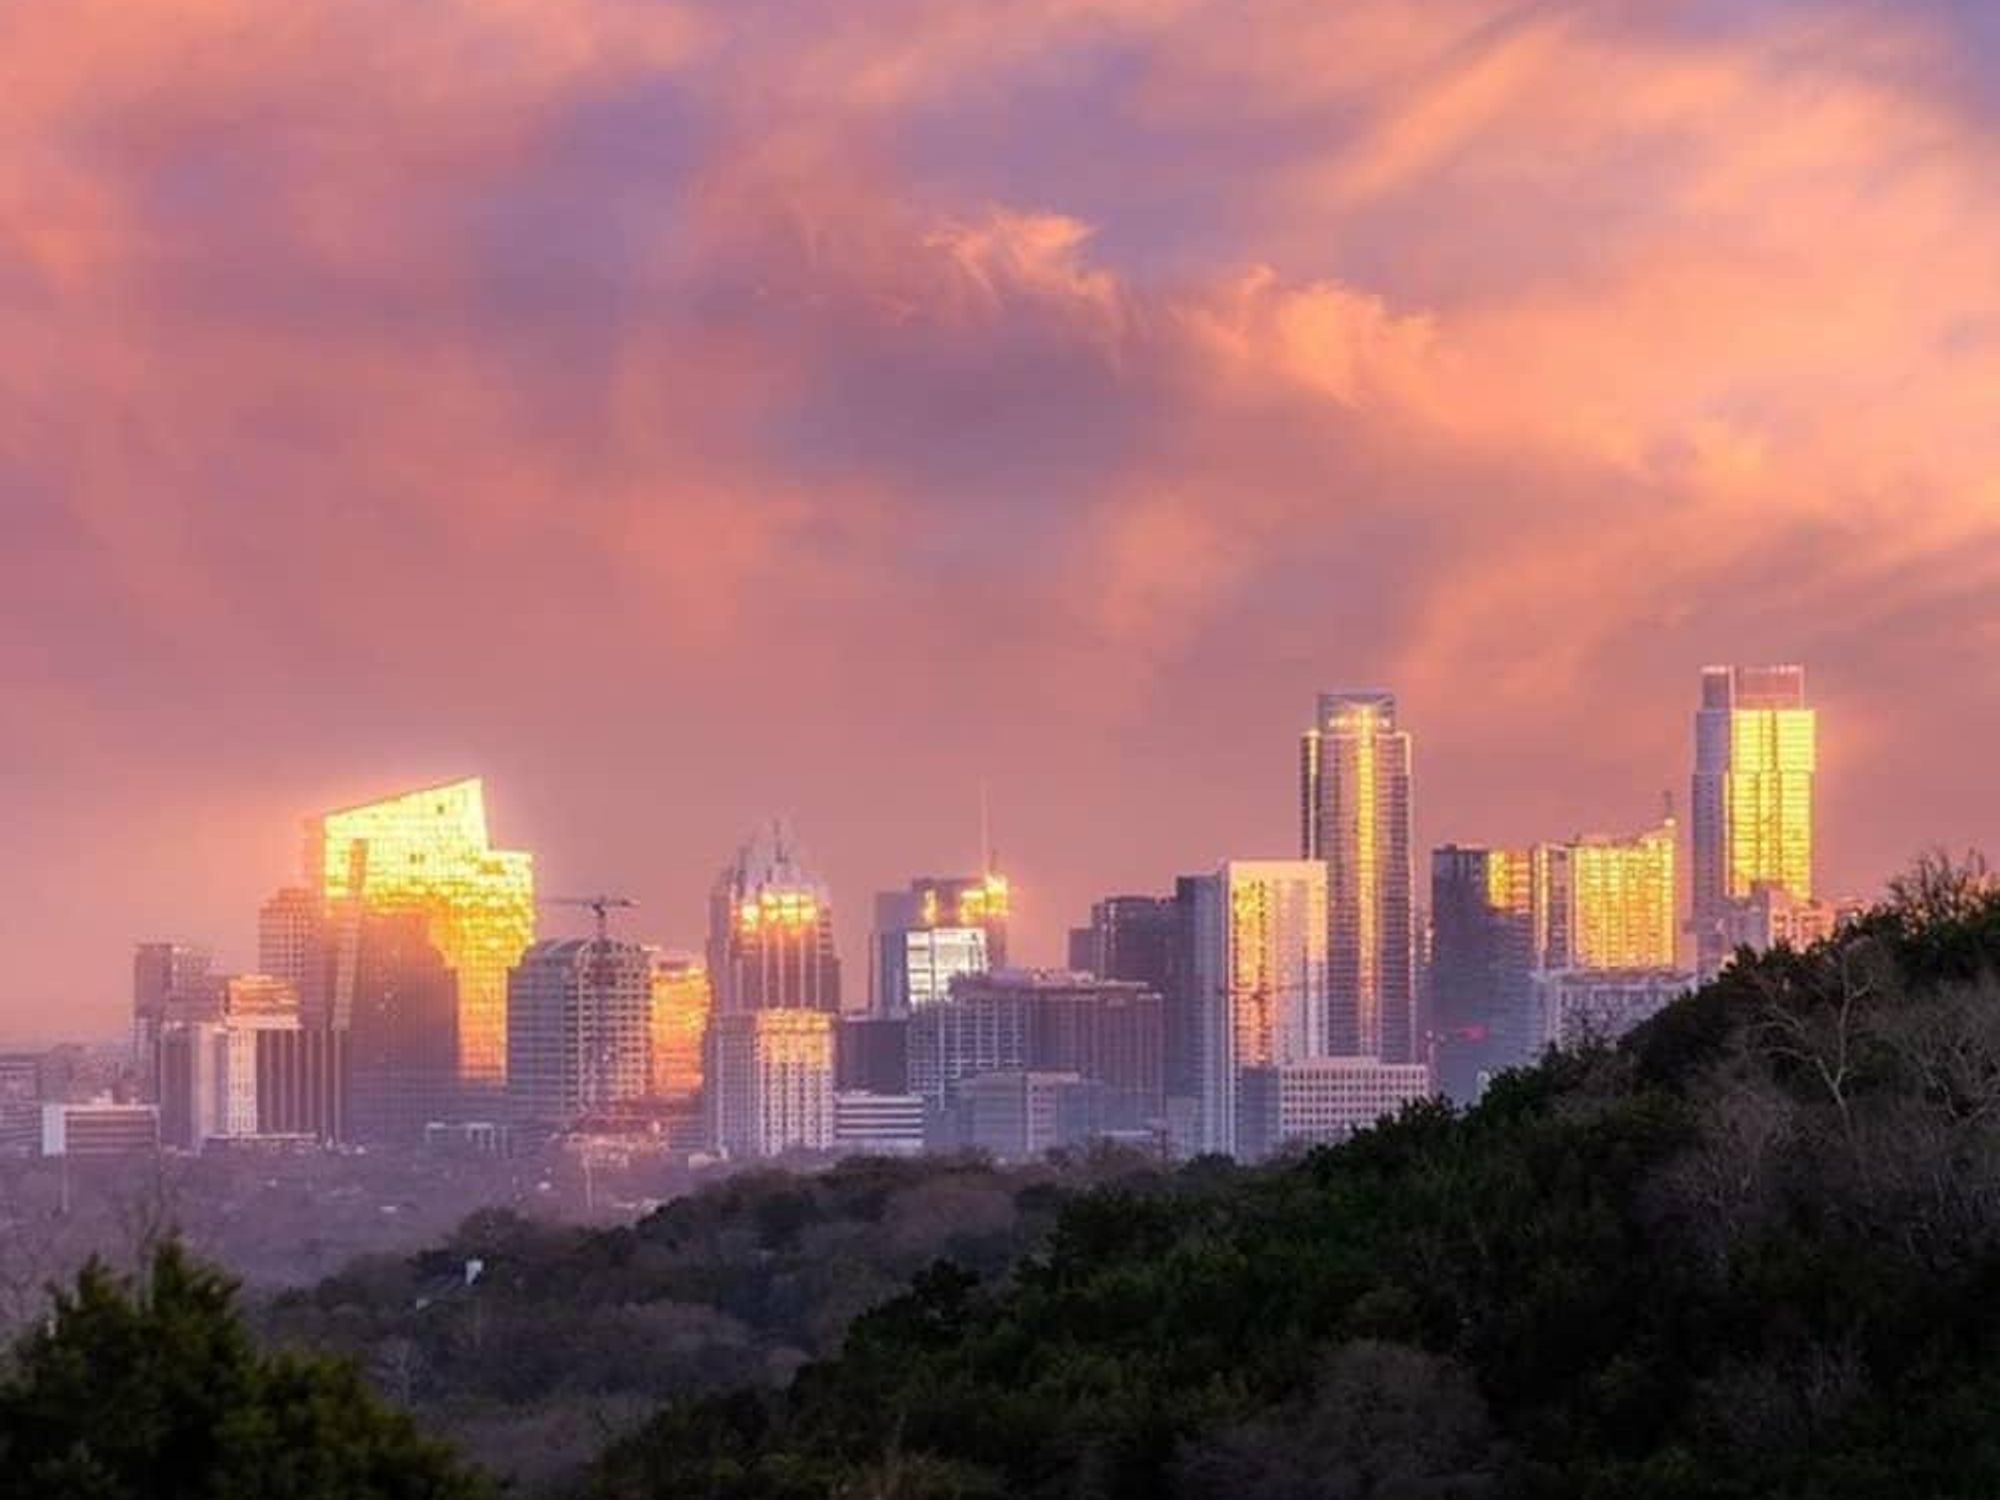 Austin skyline at sunset